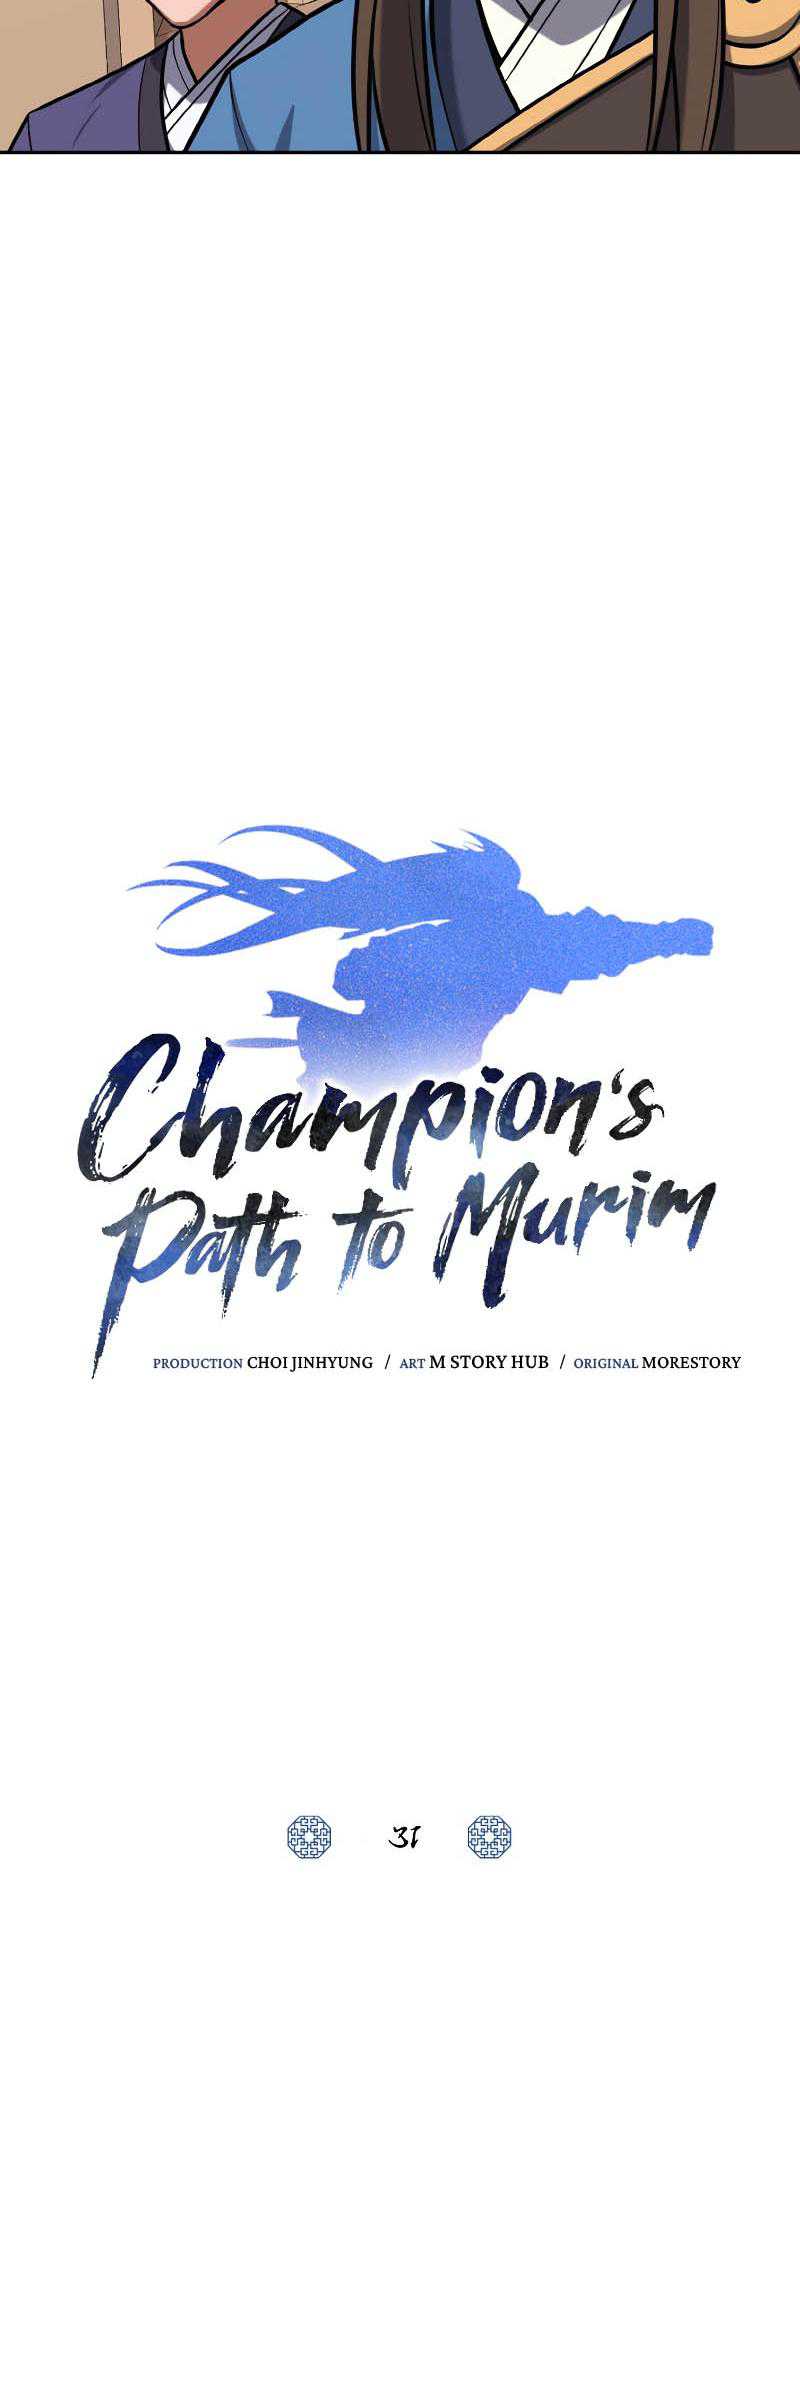 Champion’s Path to Murim Chapter 31